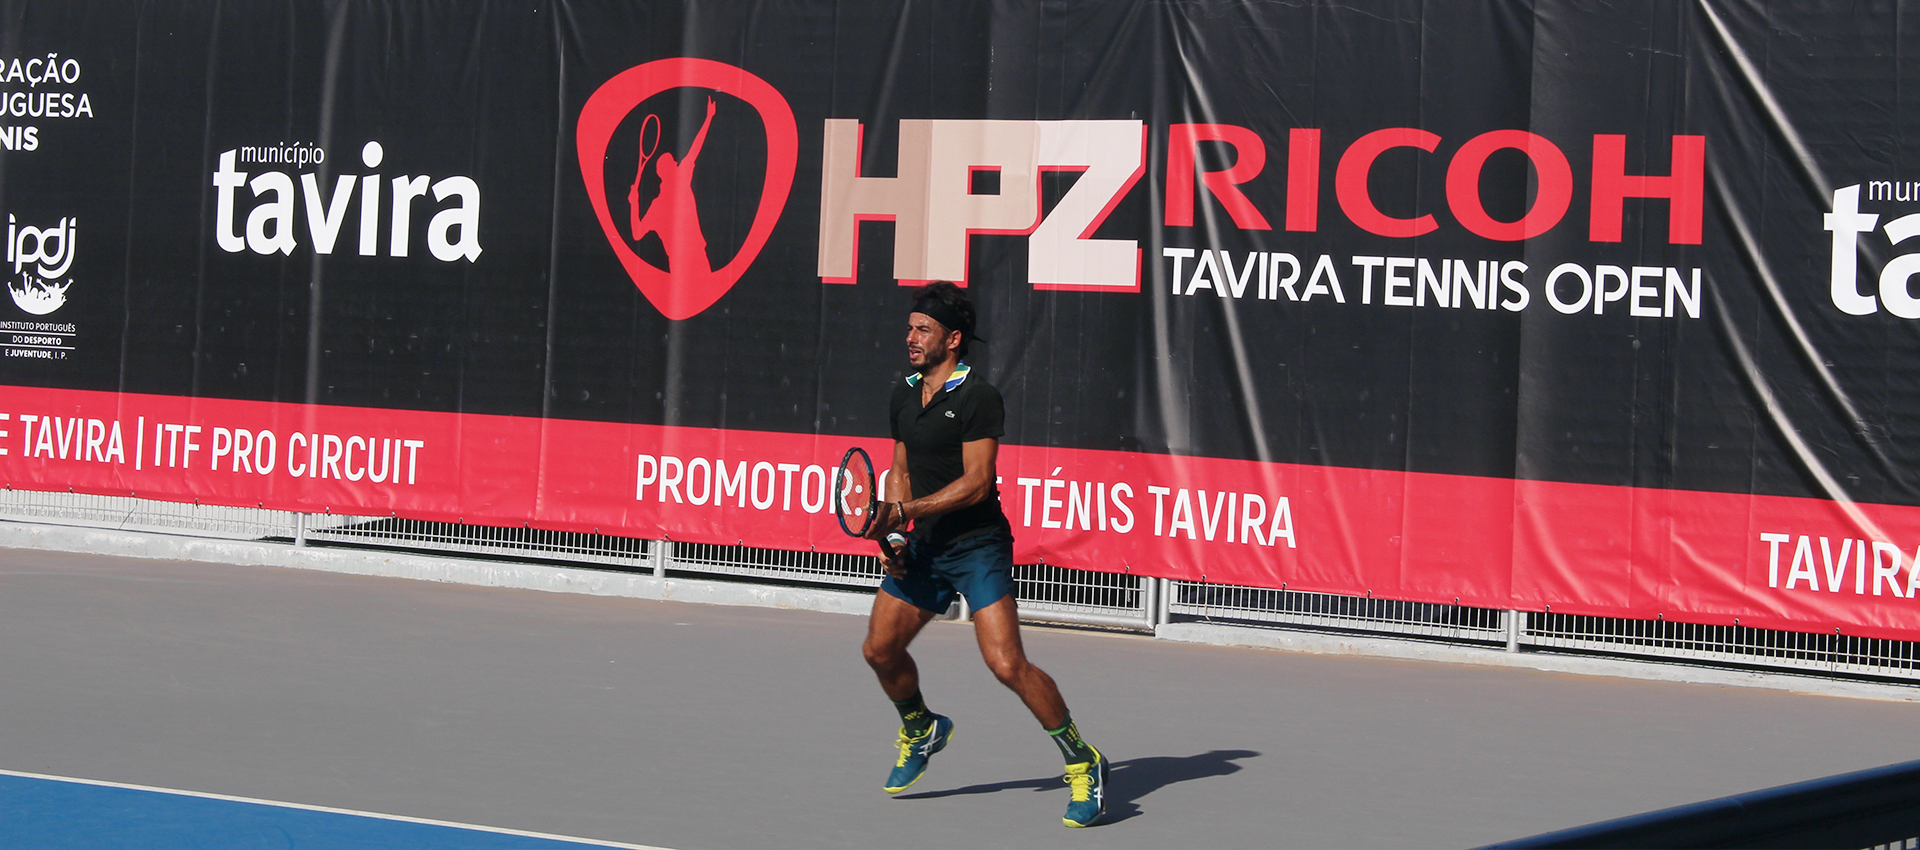 HPZ Title Sponsor do Tavira Tennis Open